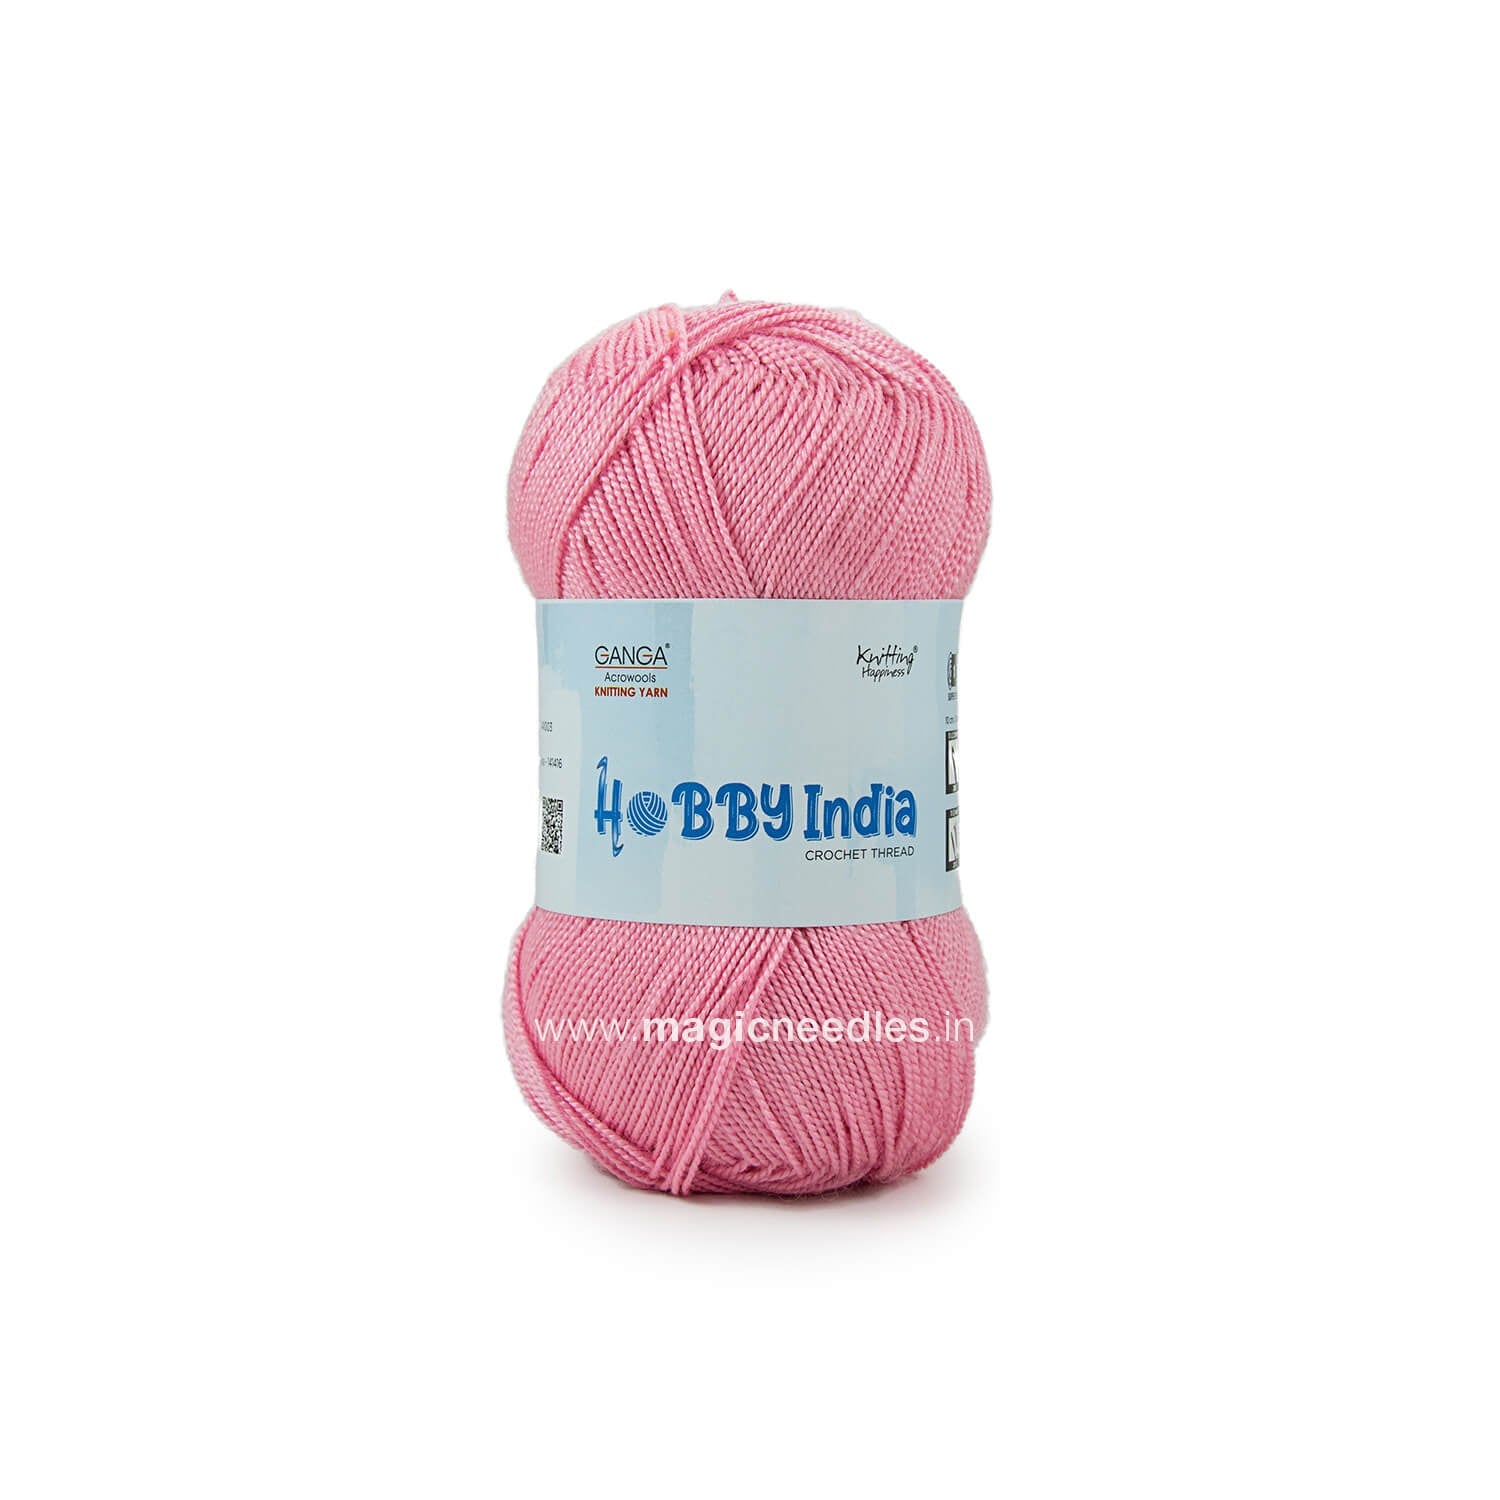 Ganga Hobby India Crochet Thread - Pink 09